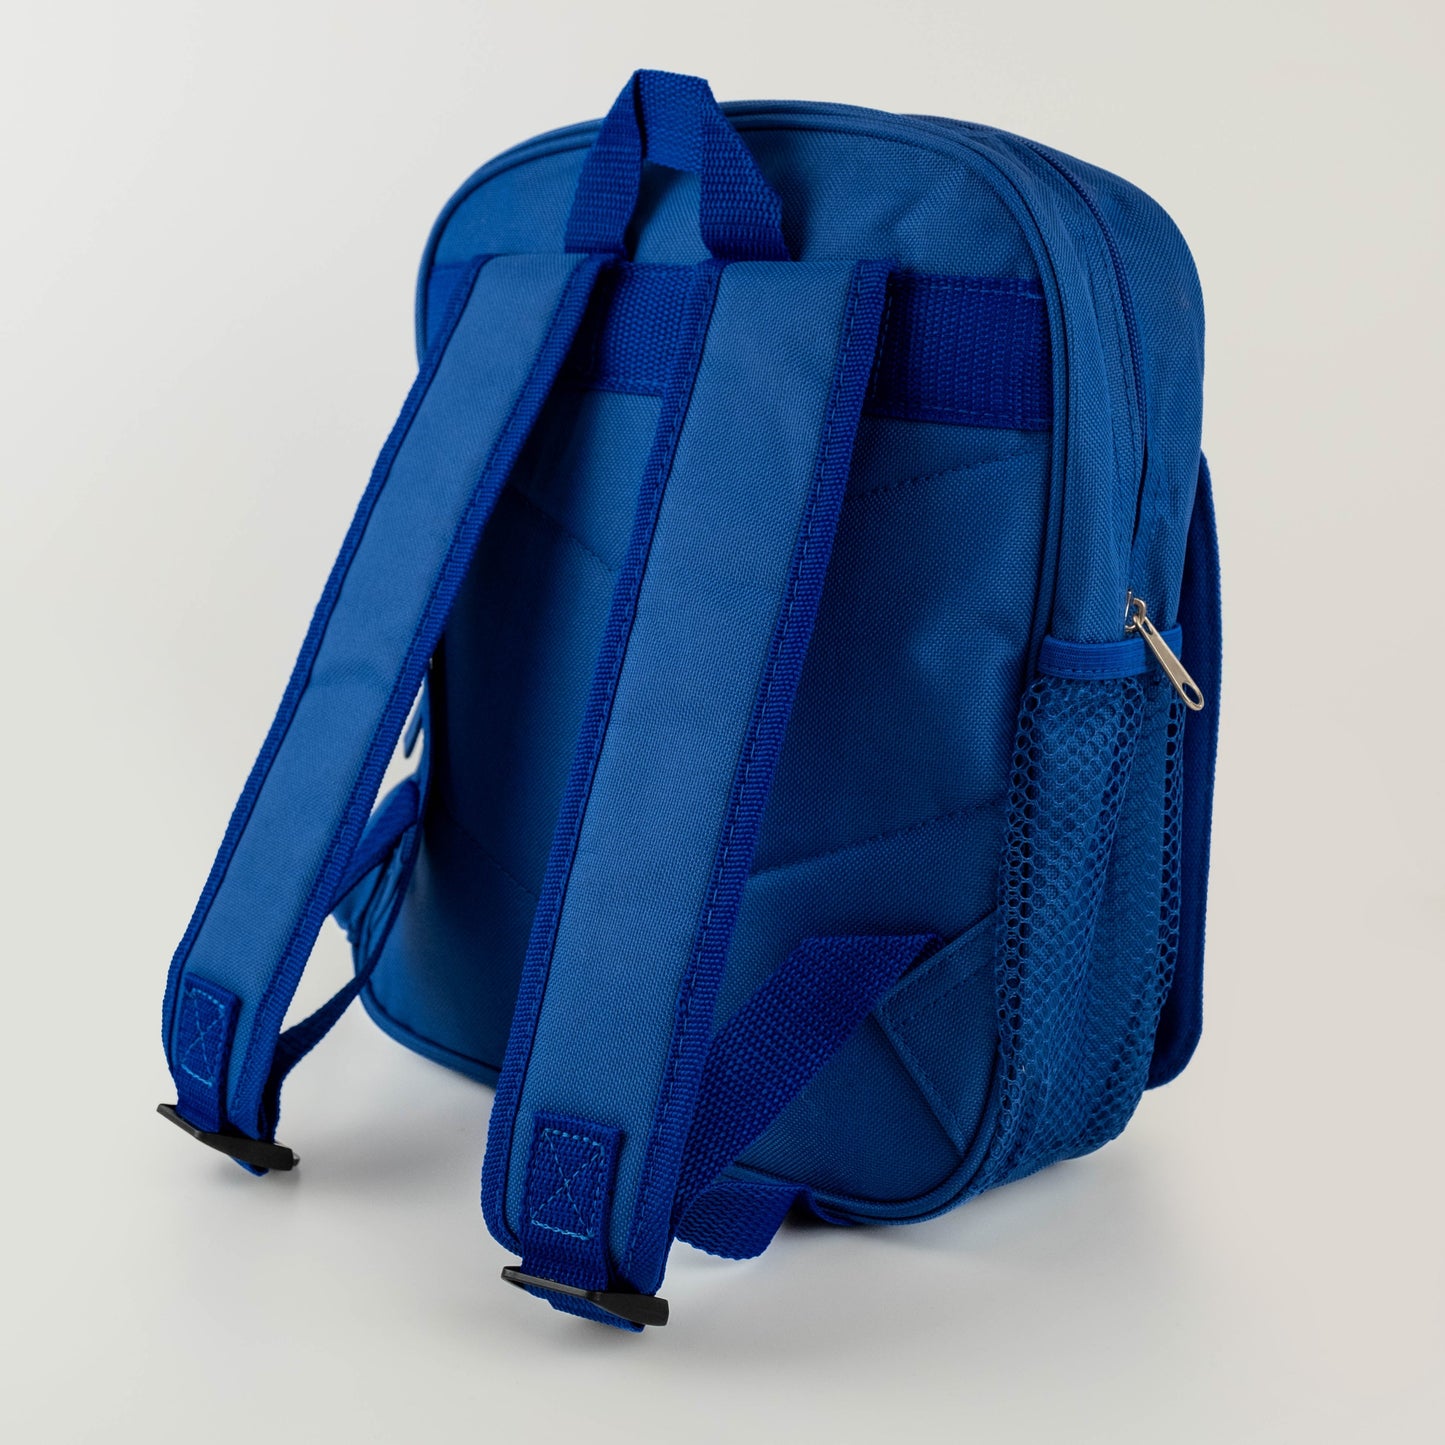 Children’s Personalised Backpack - Farm Design